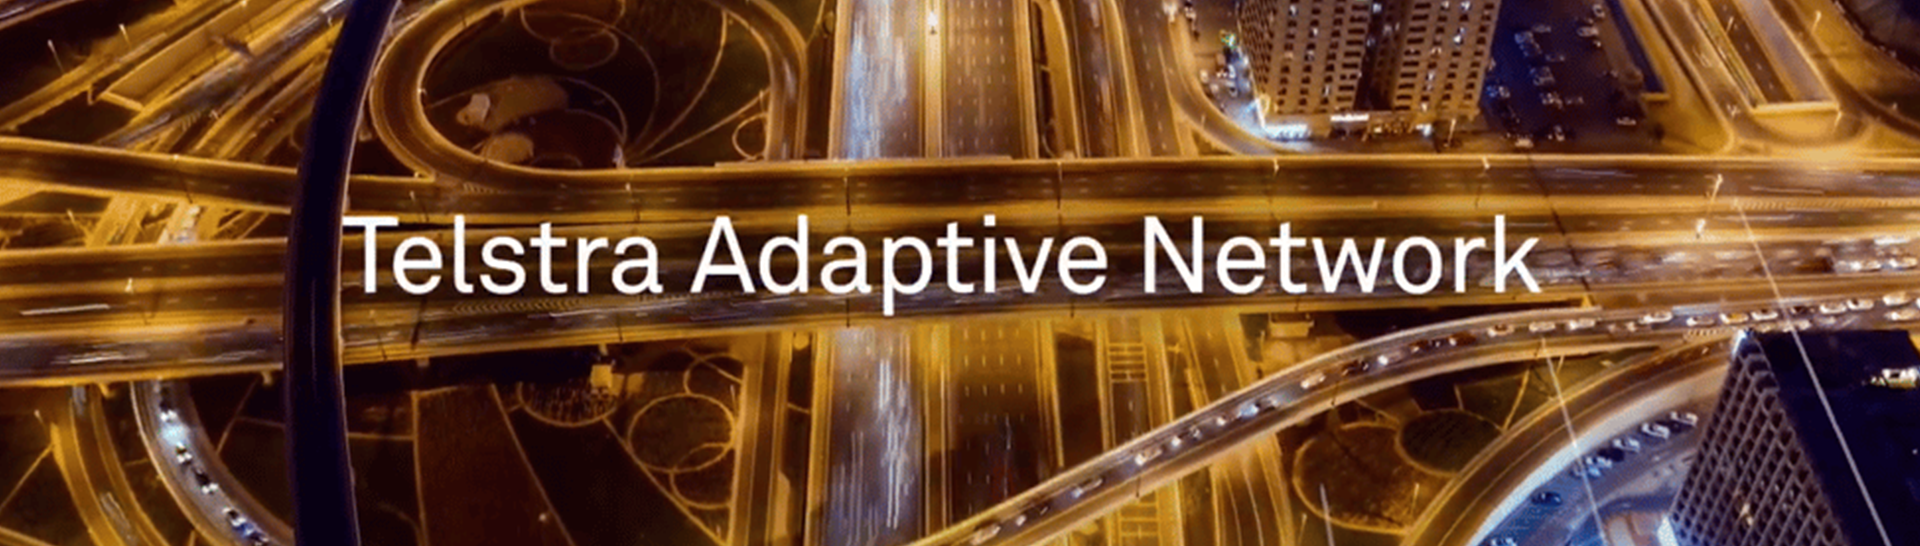 Telstra Adaptive Network resized